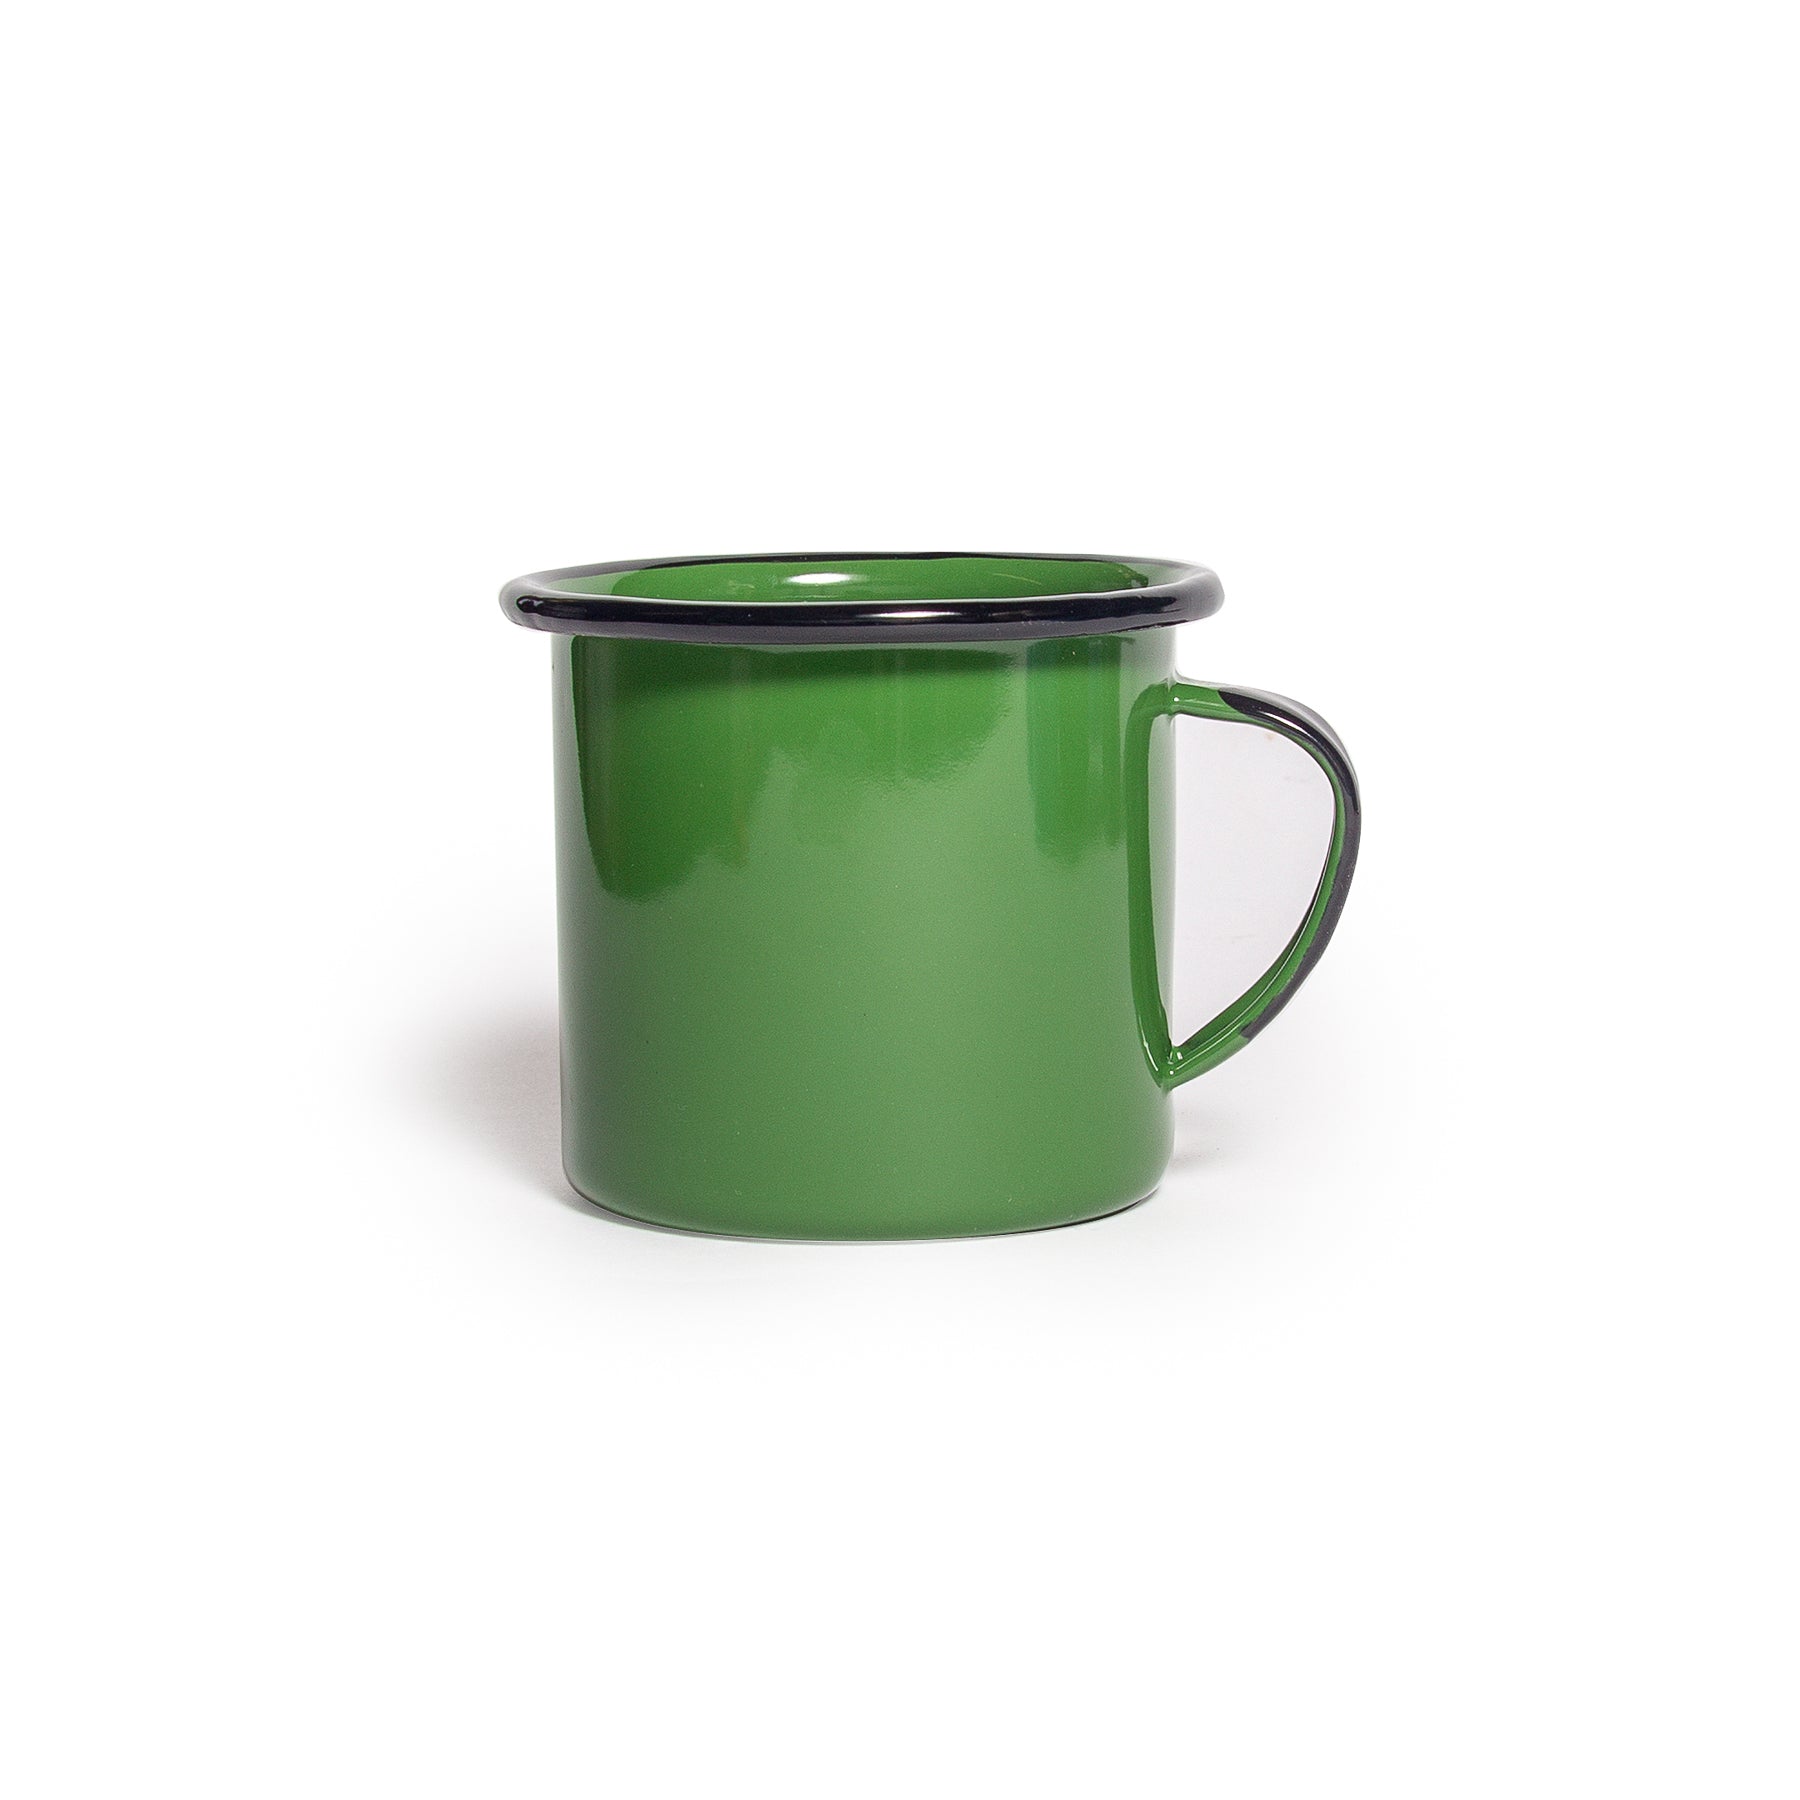 Green and Black Enamel Mug